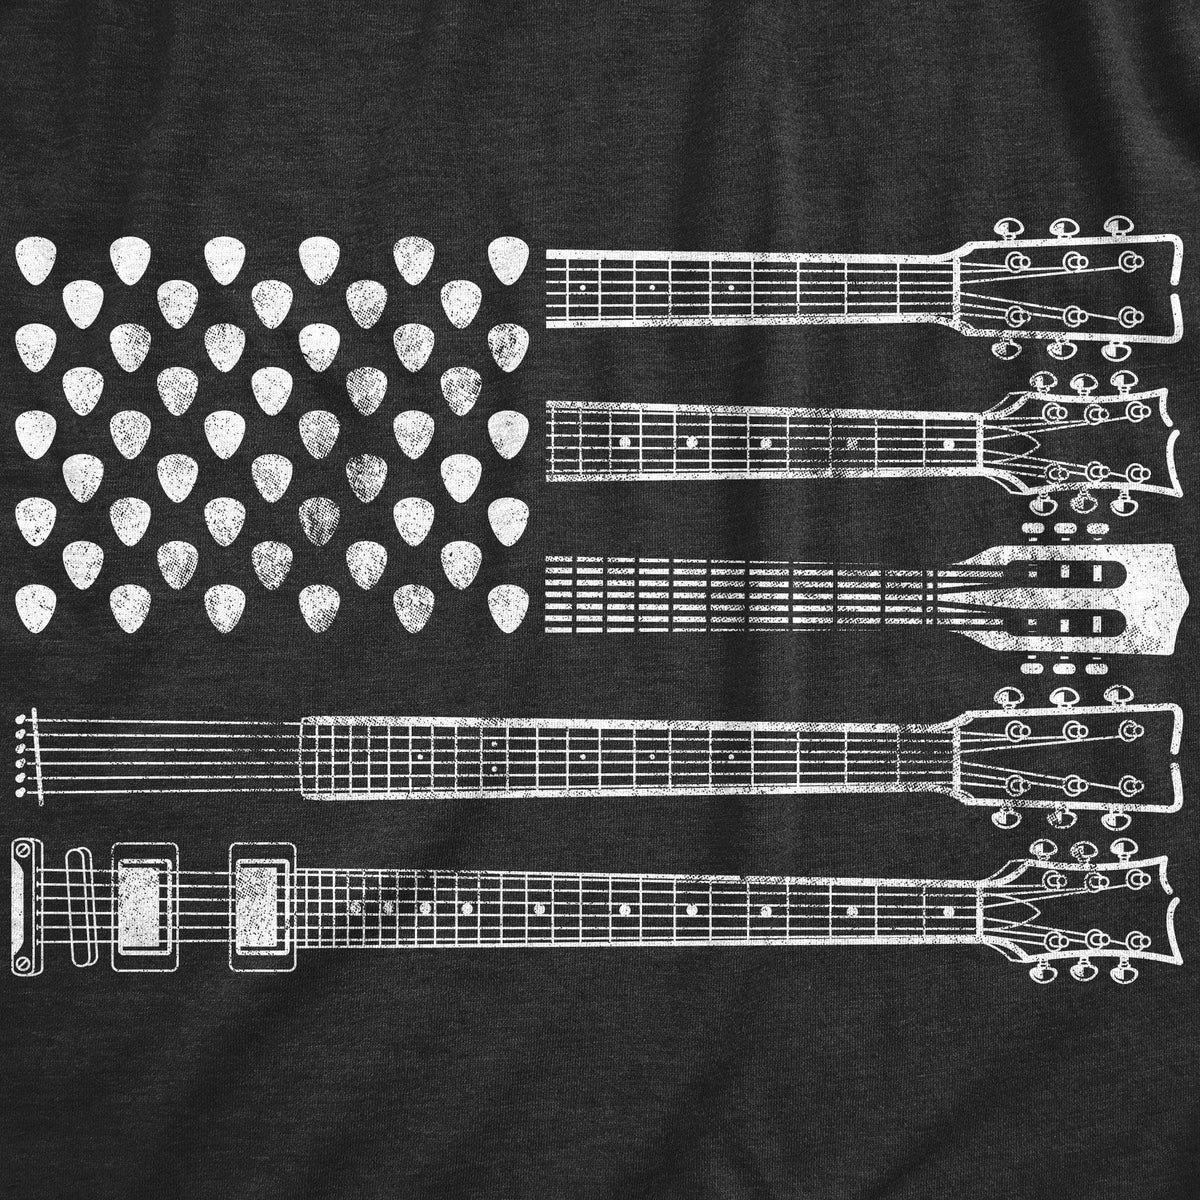 Guitar Flag Women&#39;s Tshirt - Crazy Dog T-Shirts